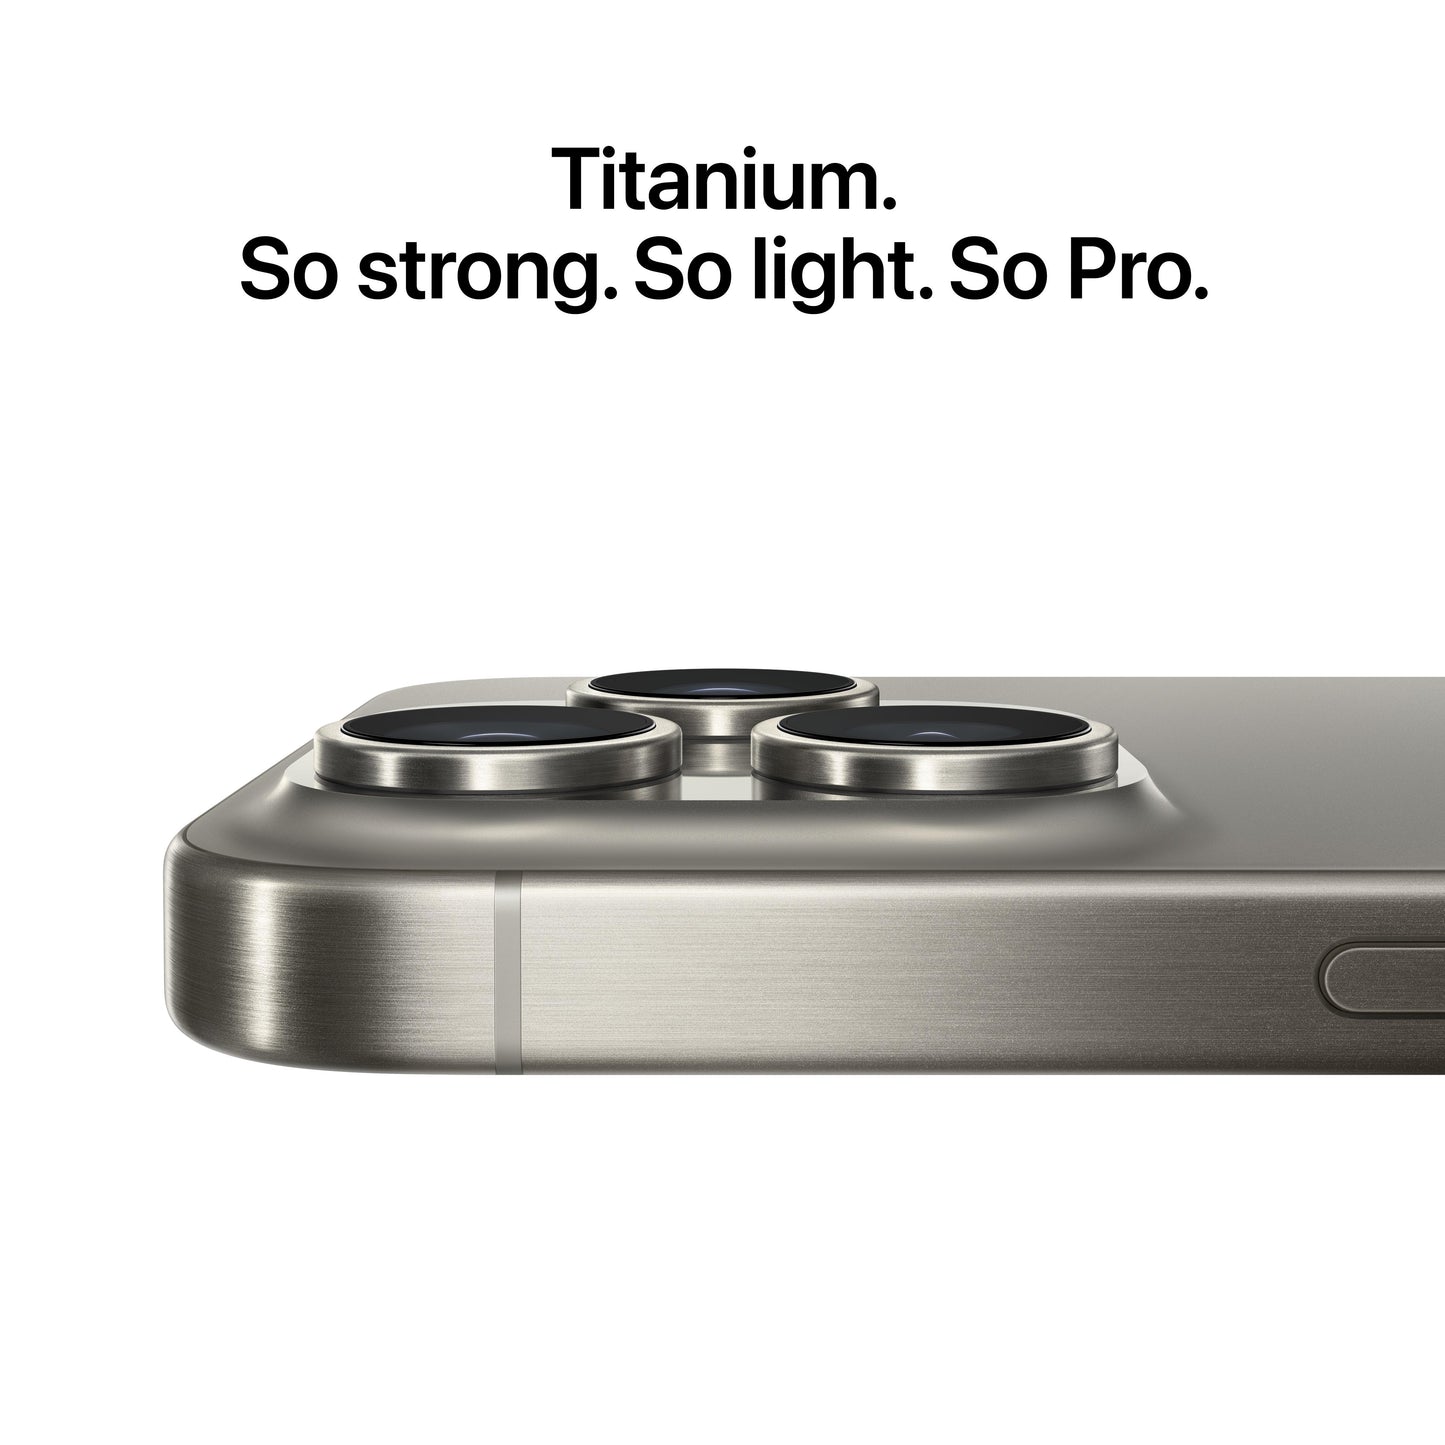 iPhone 15 Pro in Natural Titanium, 512GB Storage. EMI available |Get best offers for iphone 15 pro [variant] Natural Titanium 512GB.